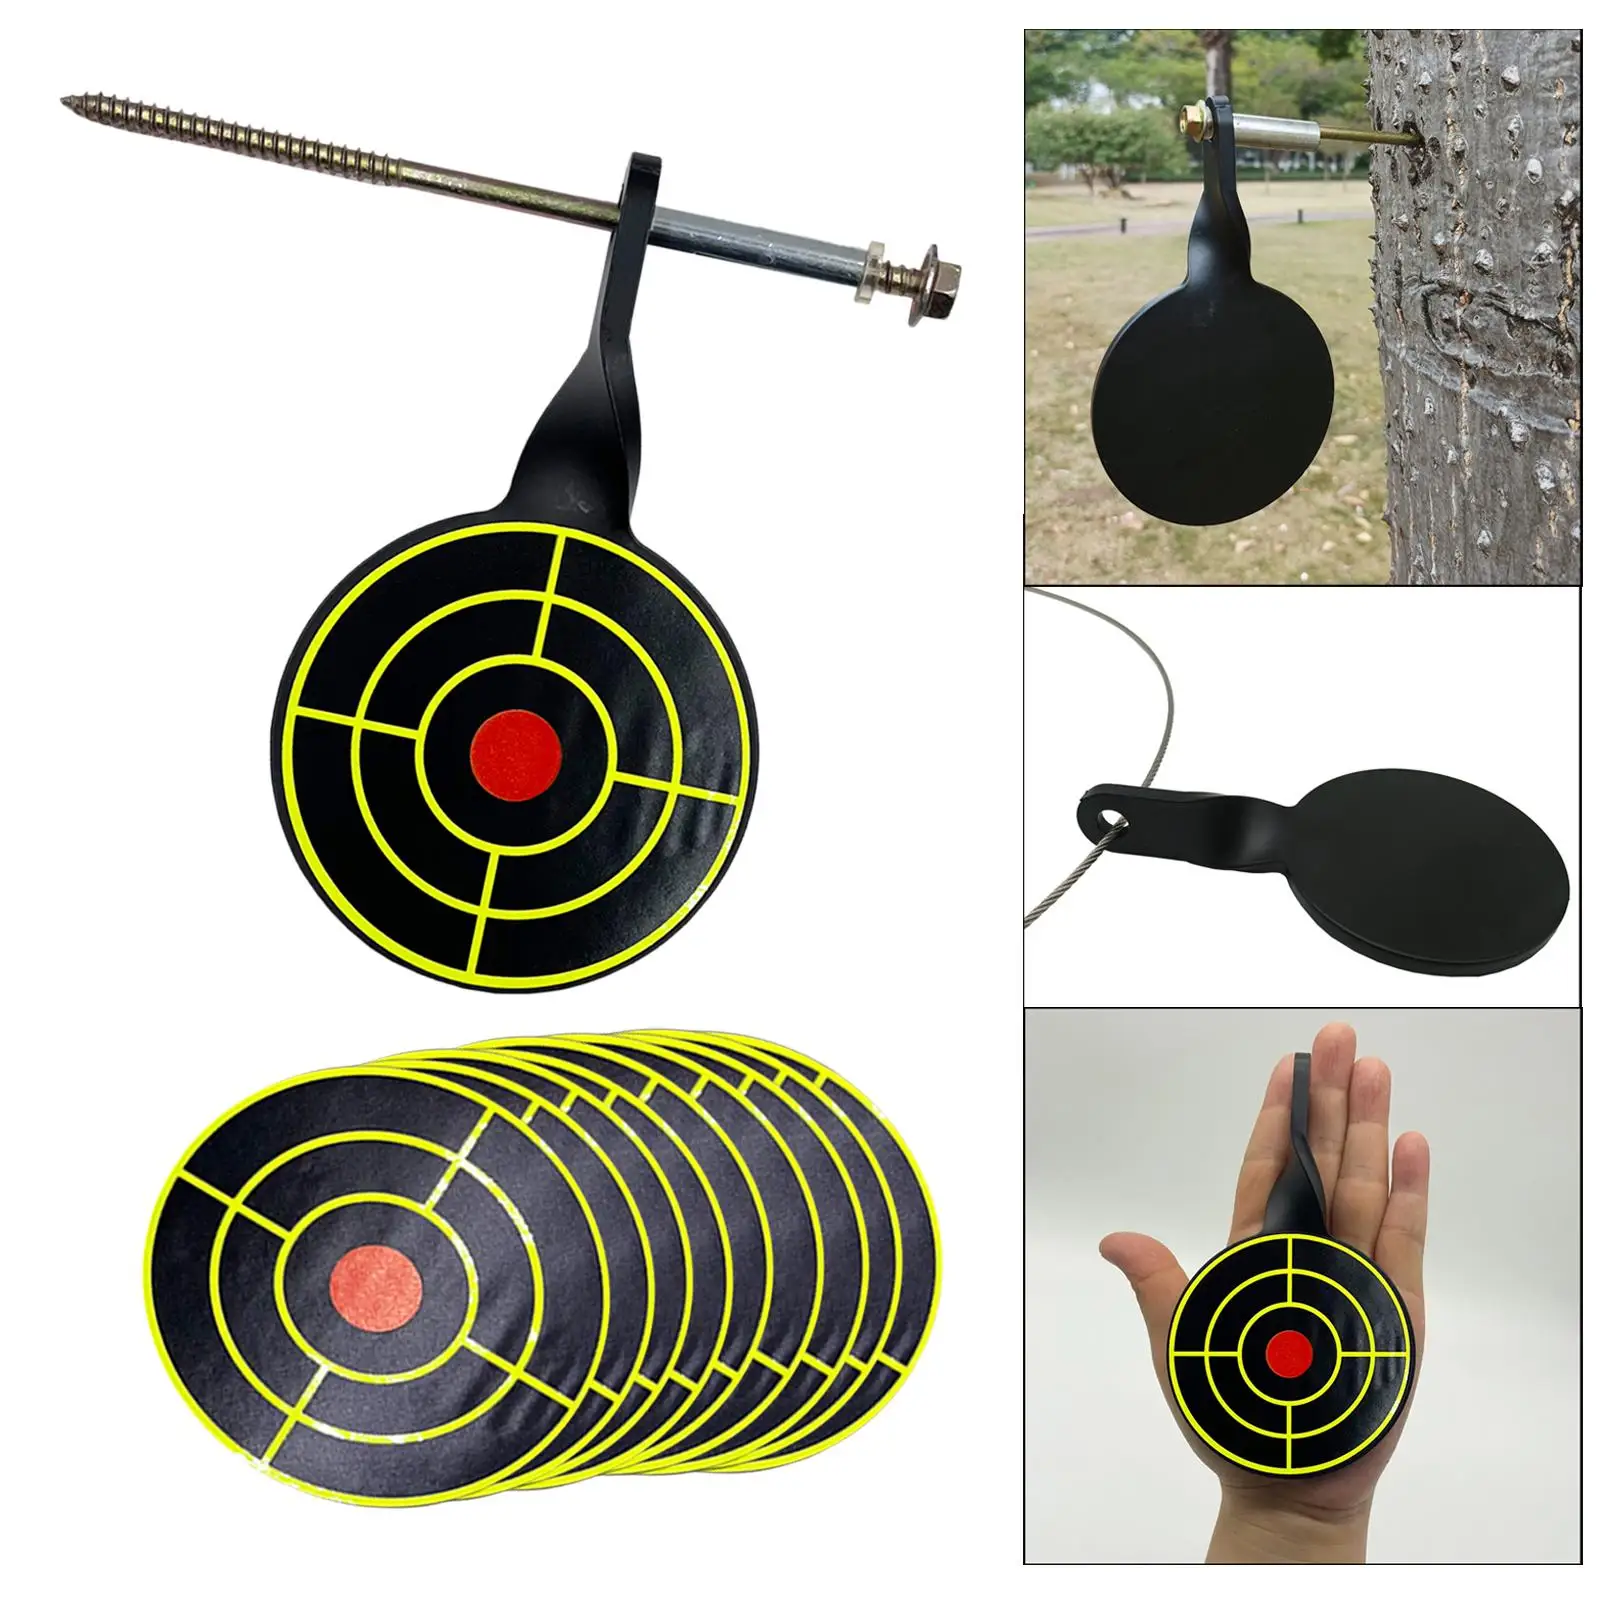 Steel Practice Target Reset Target 5mm Tree Standing Target Rotary Screwed Type for Range Outdoor Sports Toy Hunting Games